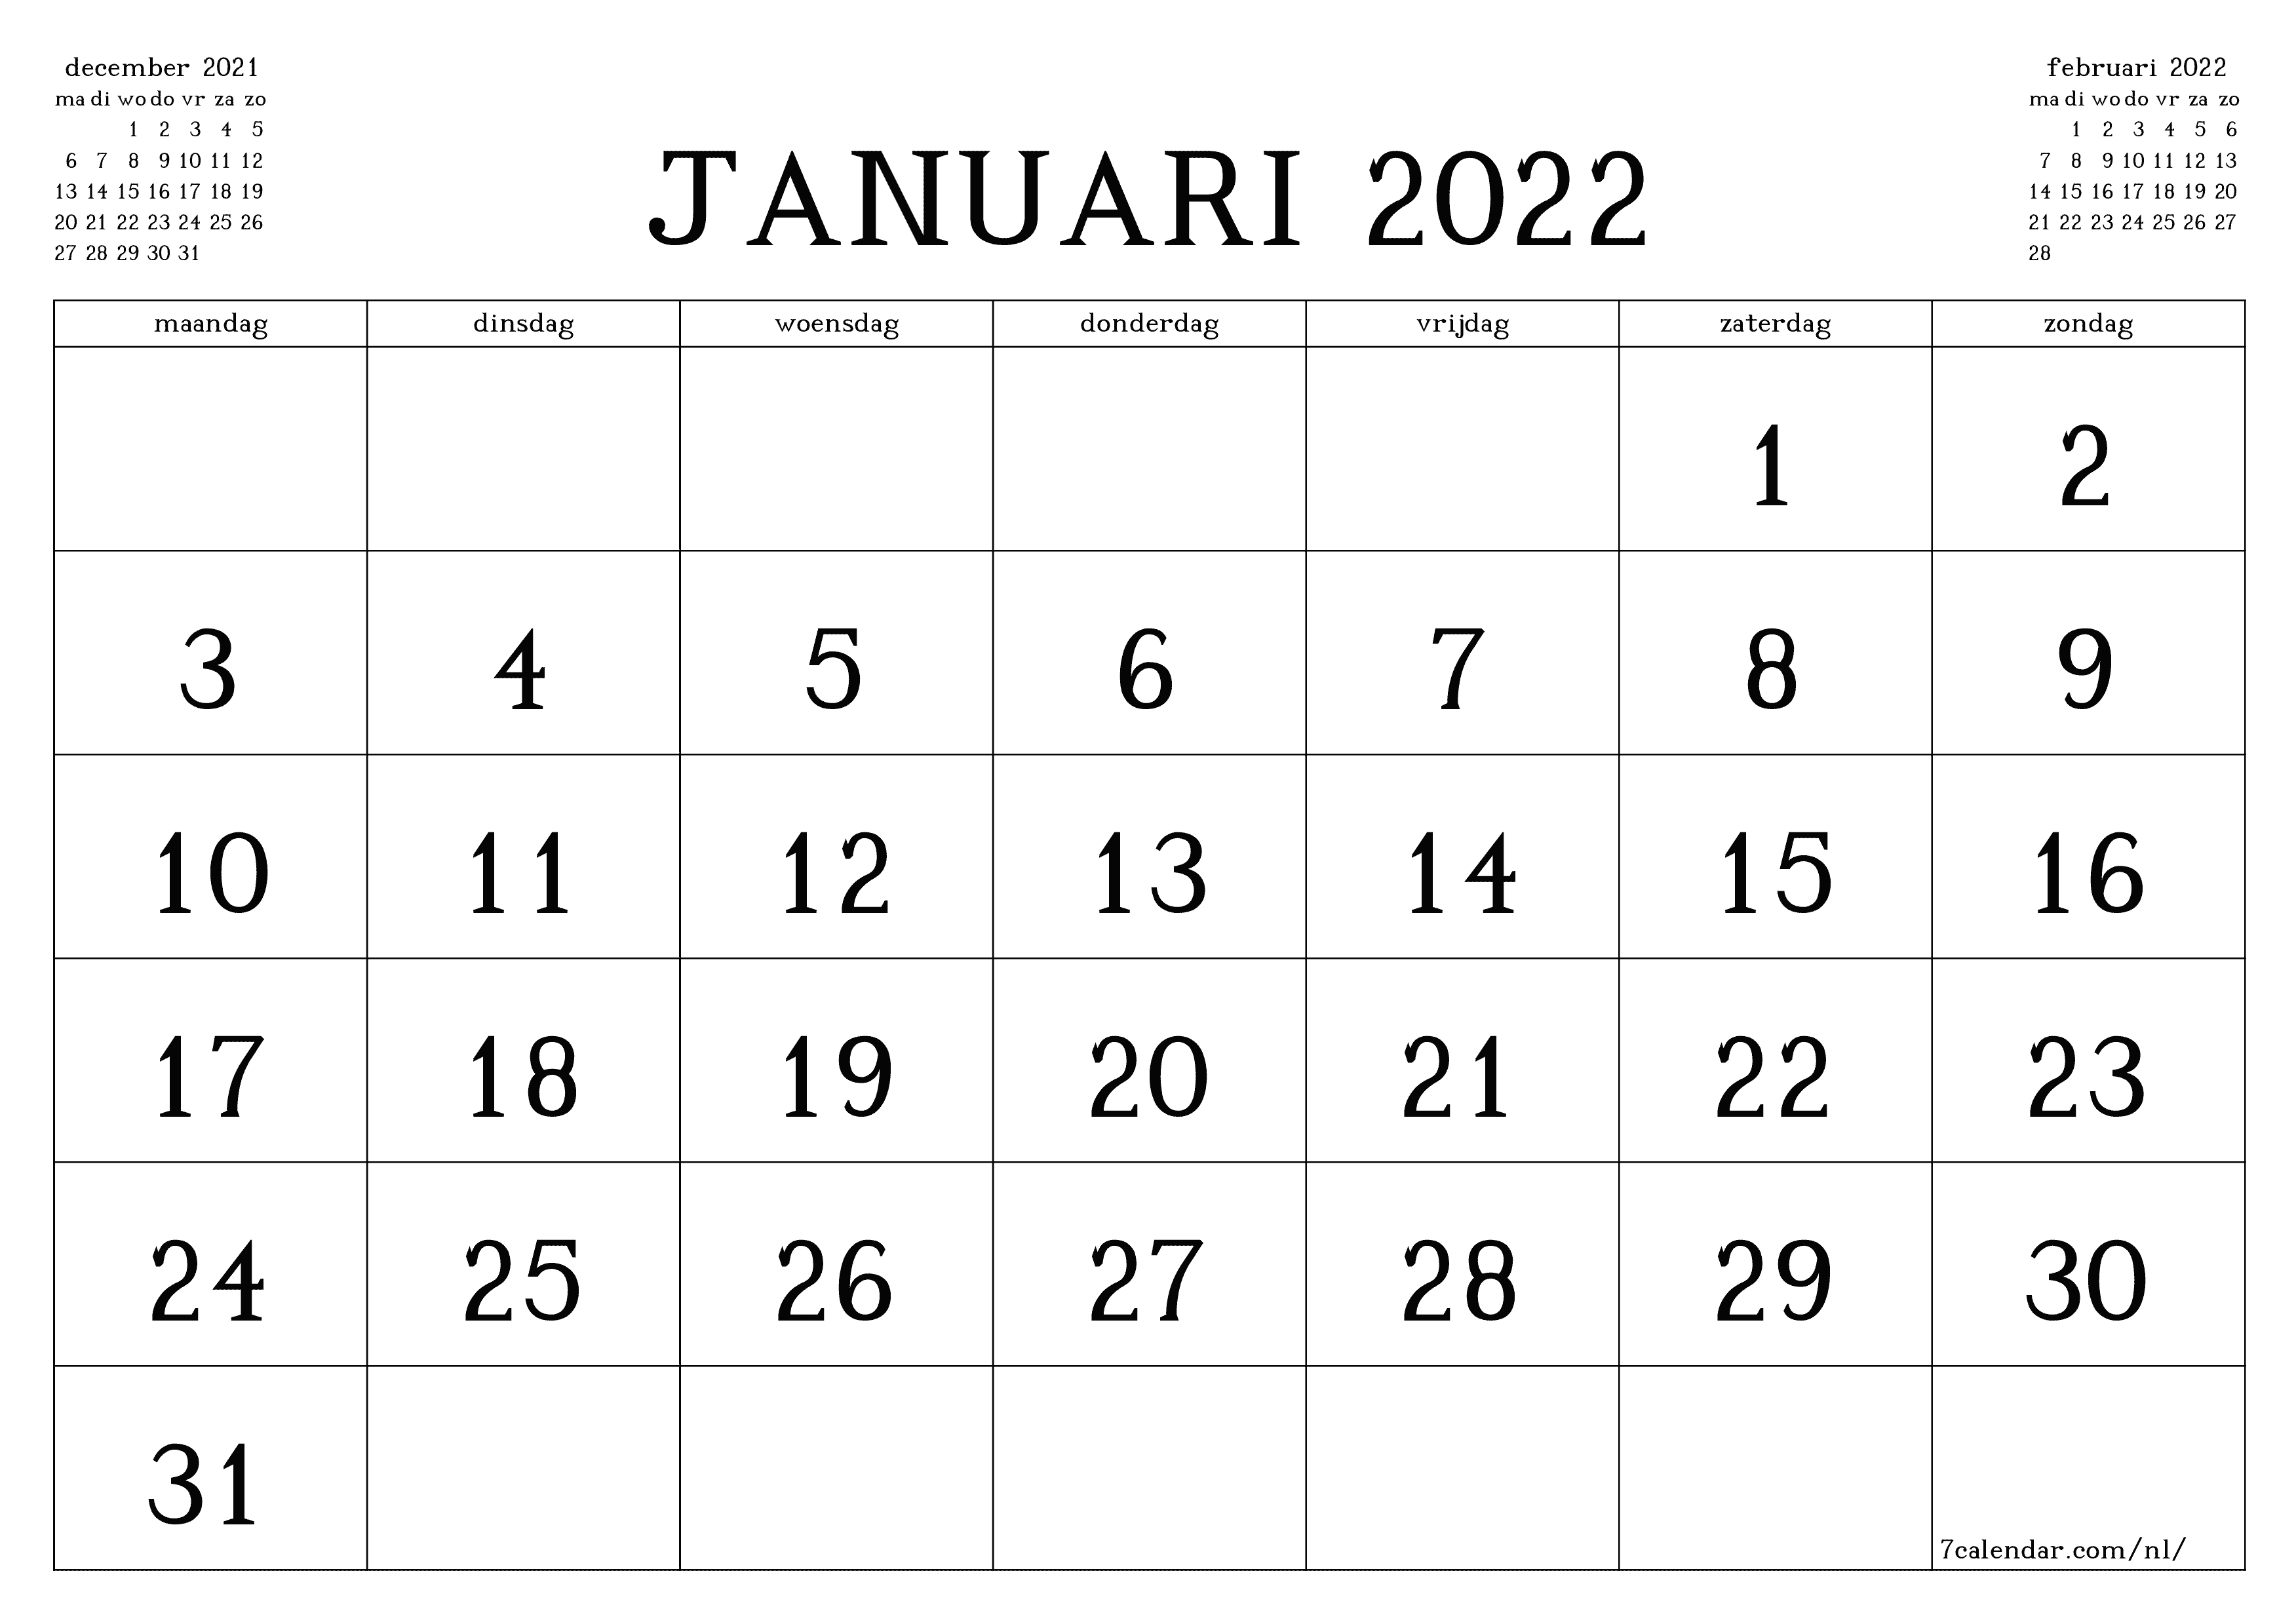 Wijziging vergoeding per 1 januari 2022